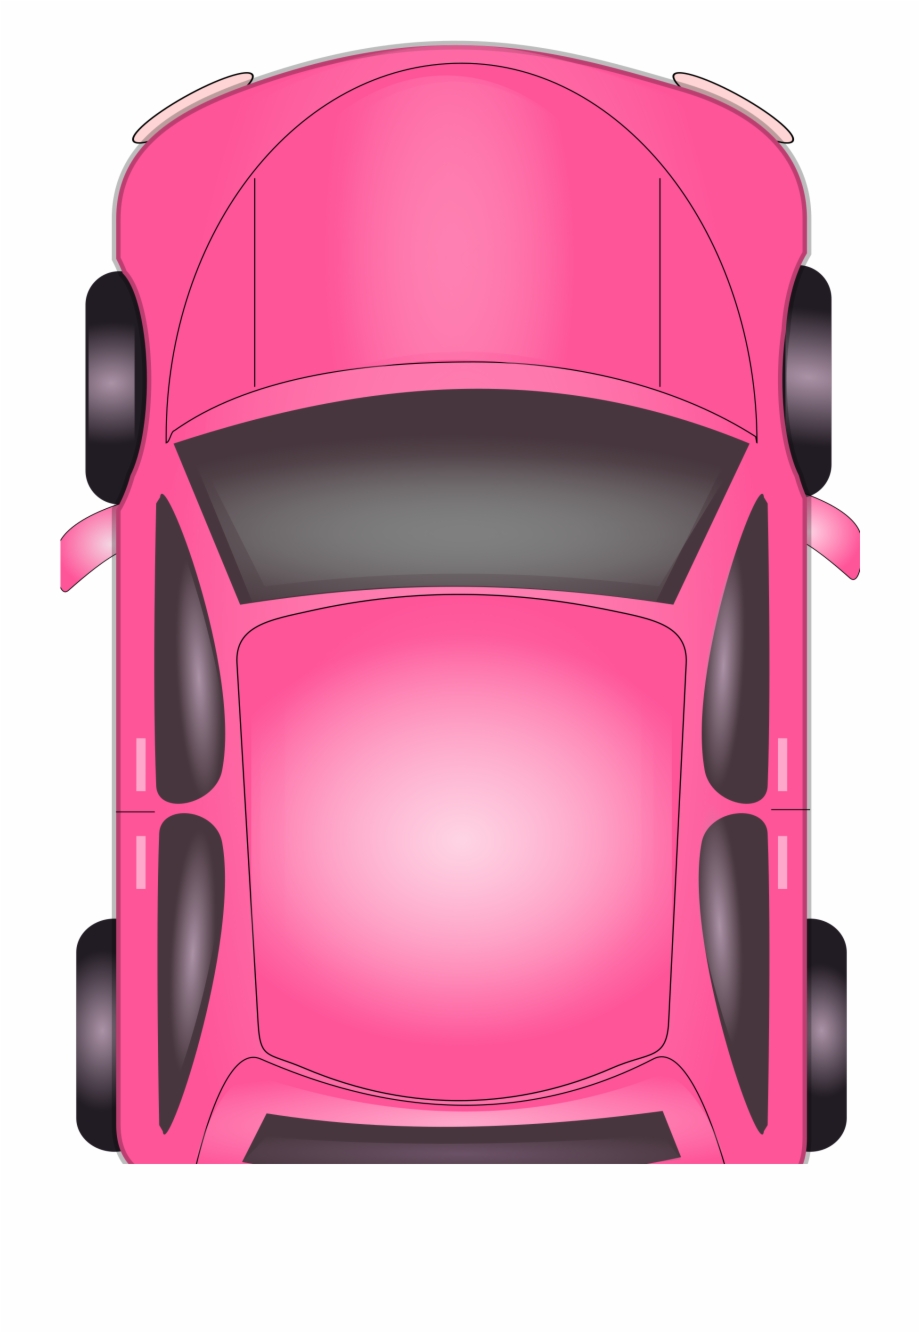 pink car top view
